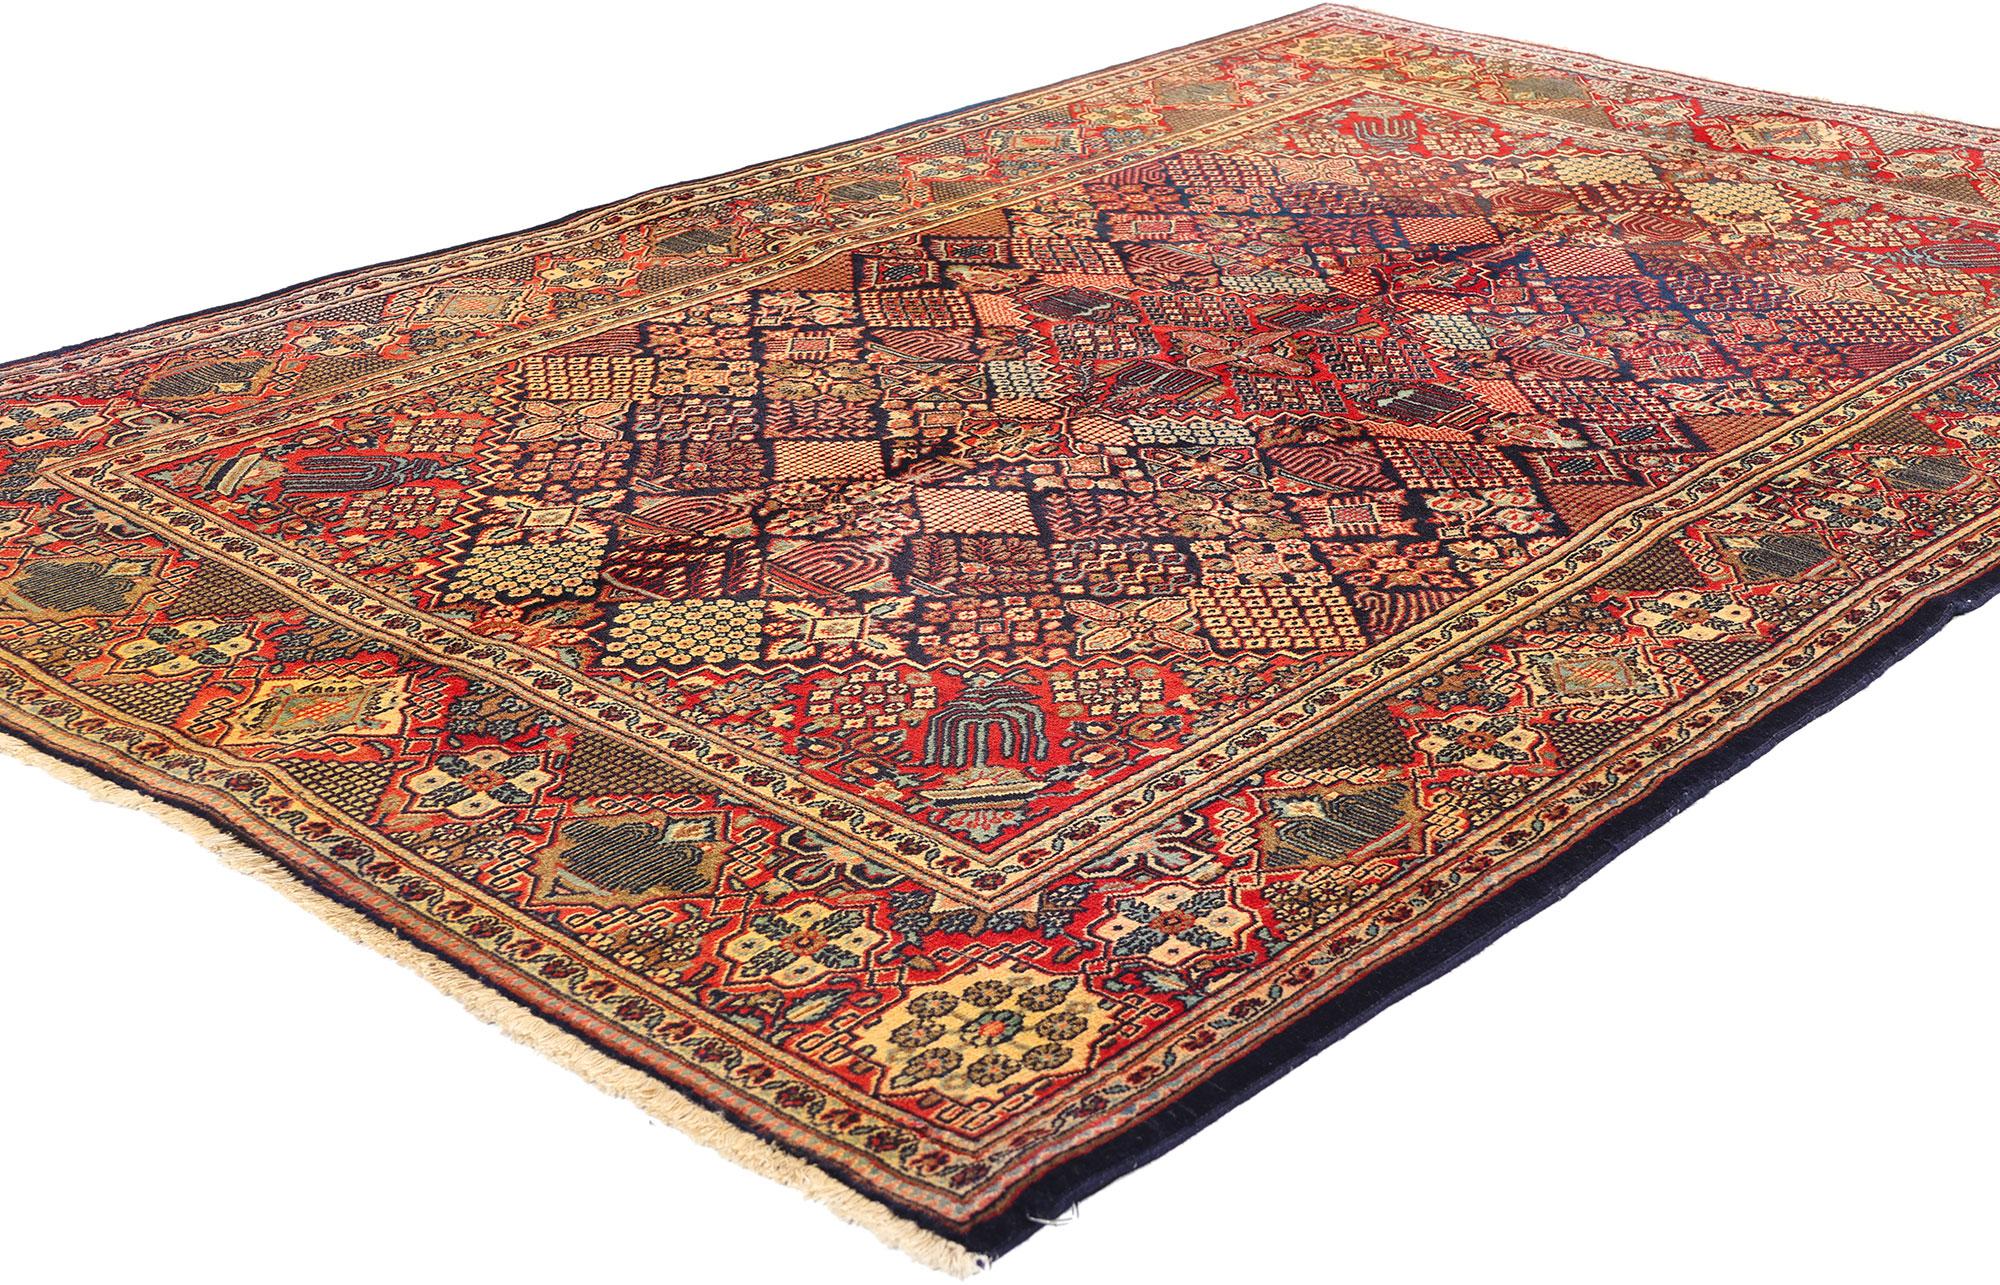 Antique Persian Kashan Rug with Joshegan Diamond Design and Jewel-Tone Colors For Sale 5